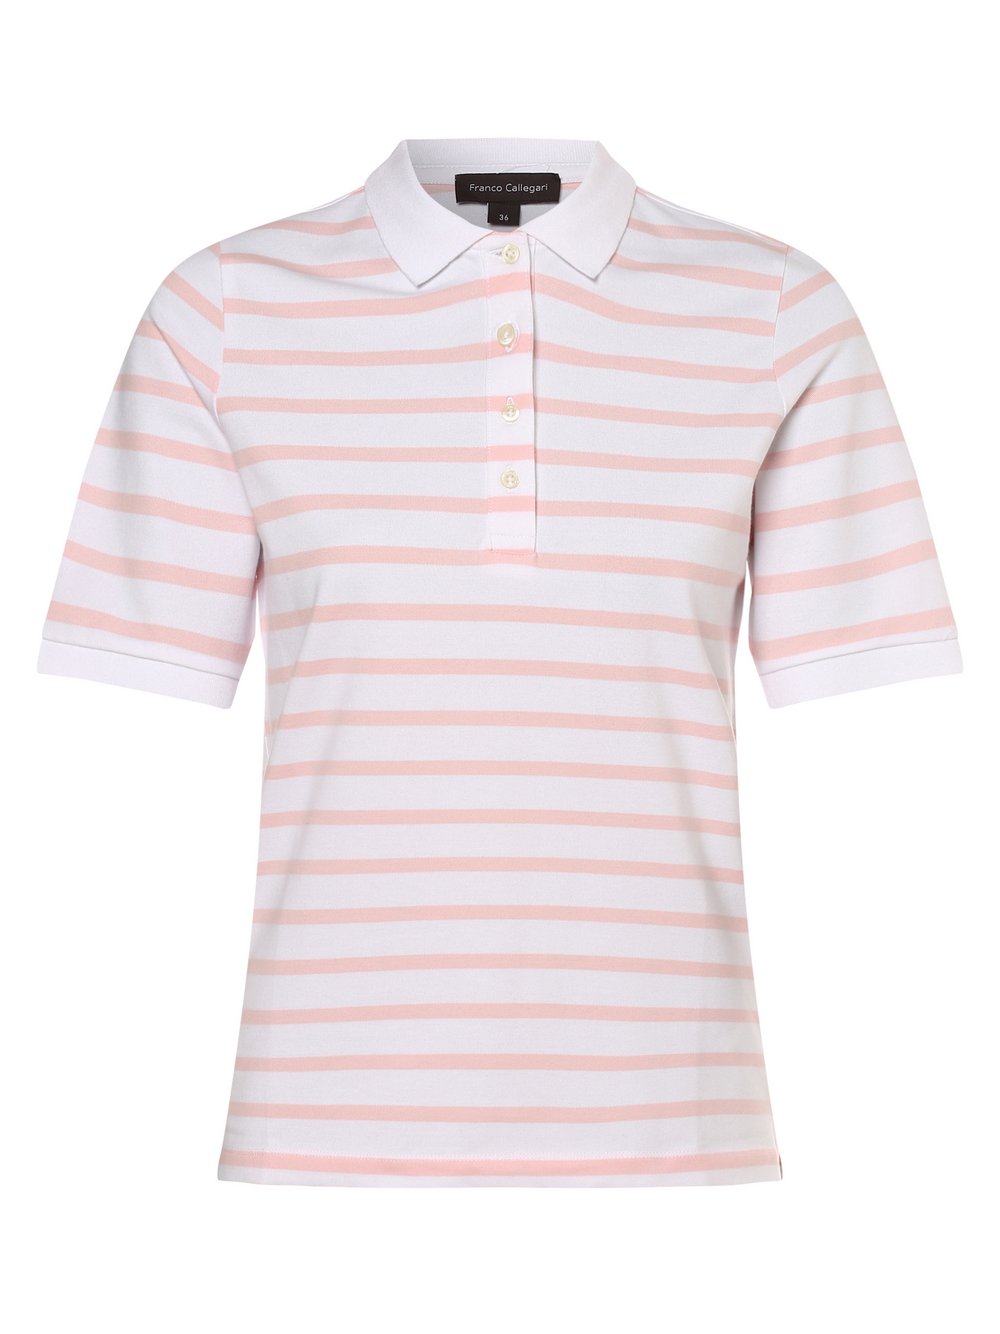 Franco Callegari - Damska koszulka polo, biały|różowy